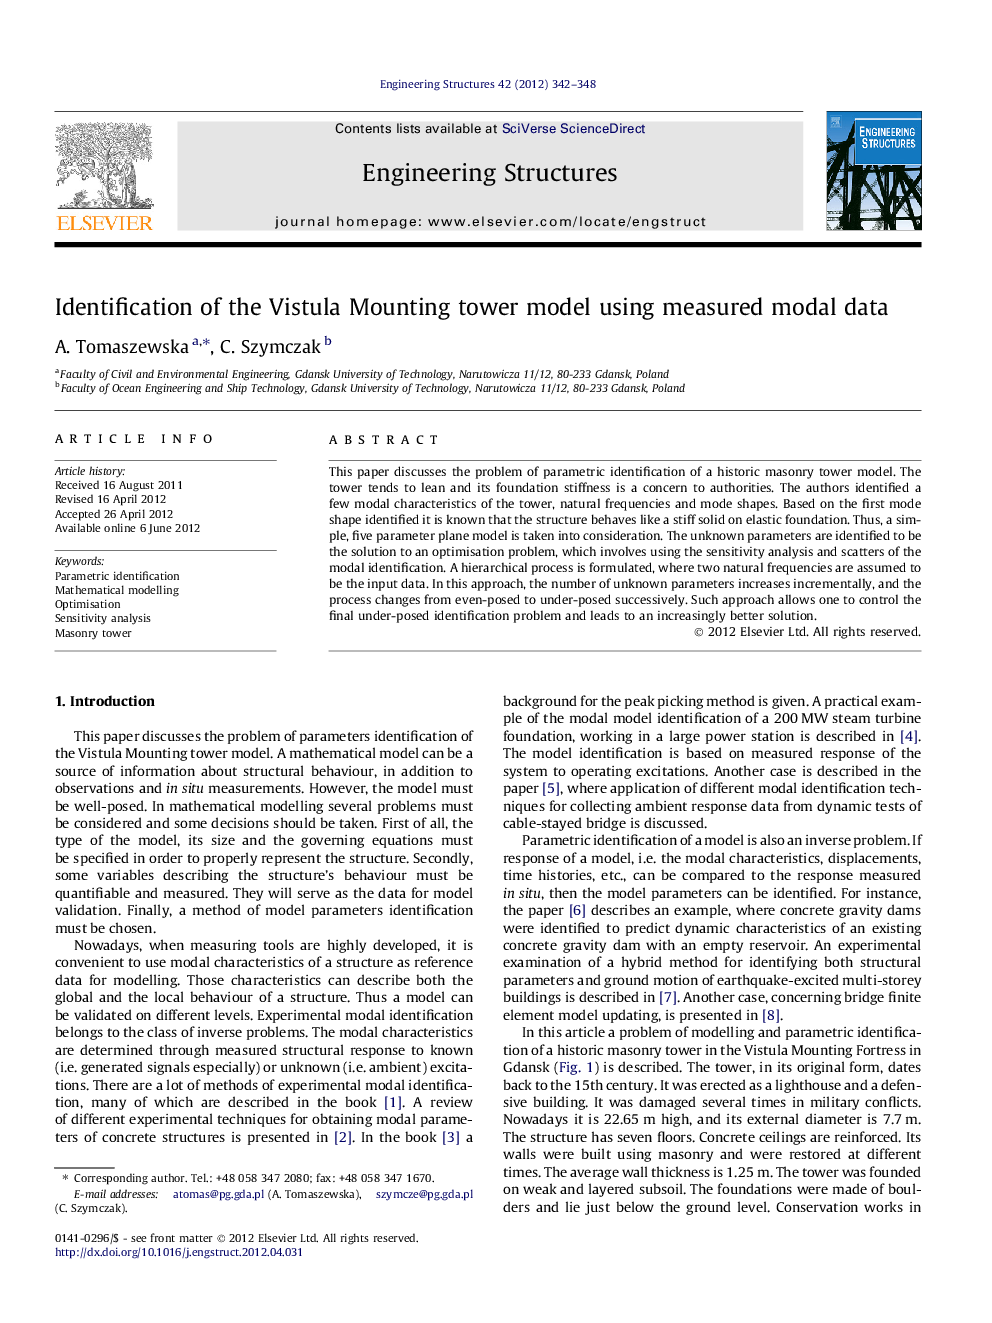 Identification of the Vistula Mounting tower model using measured modal data